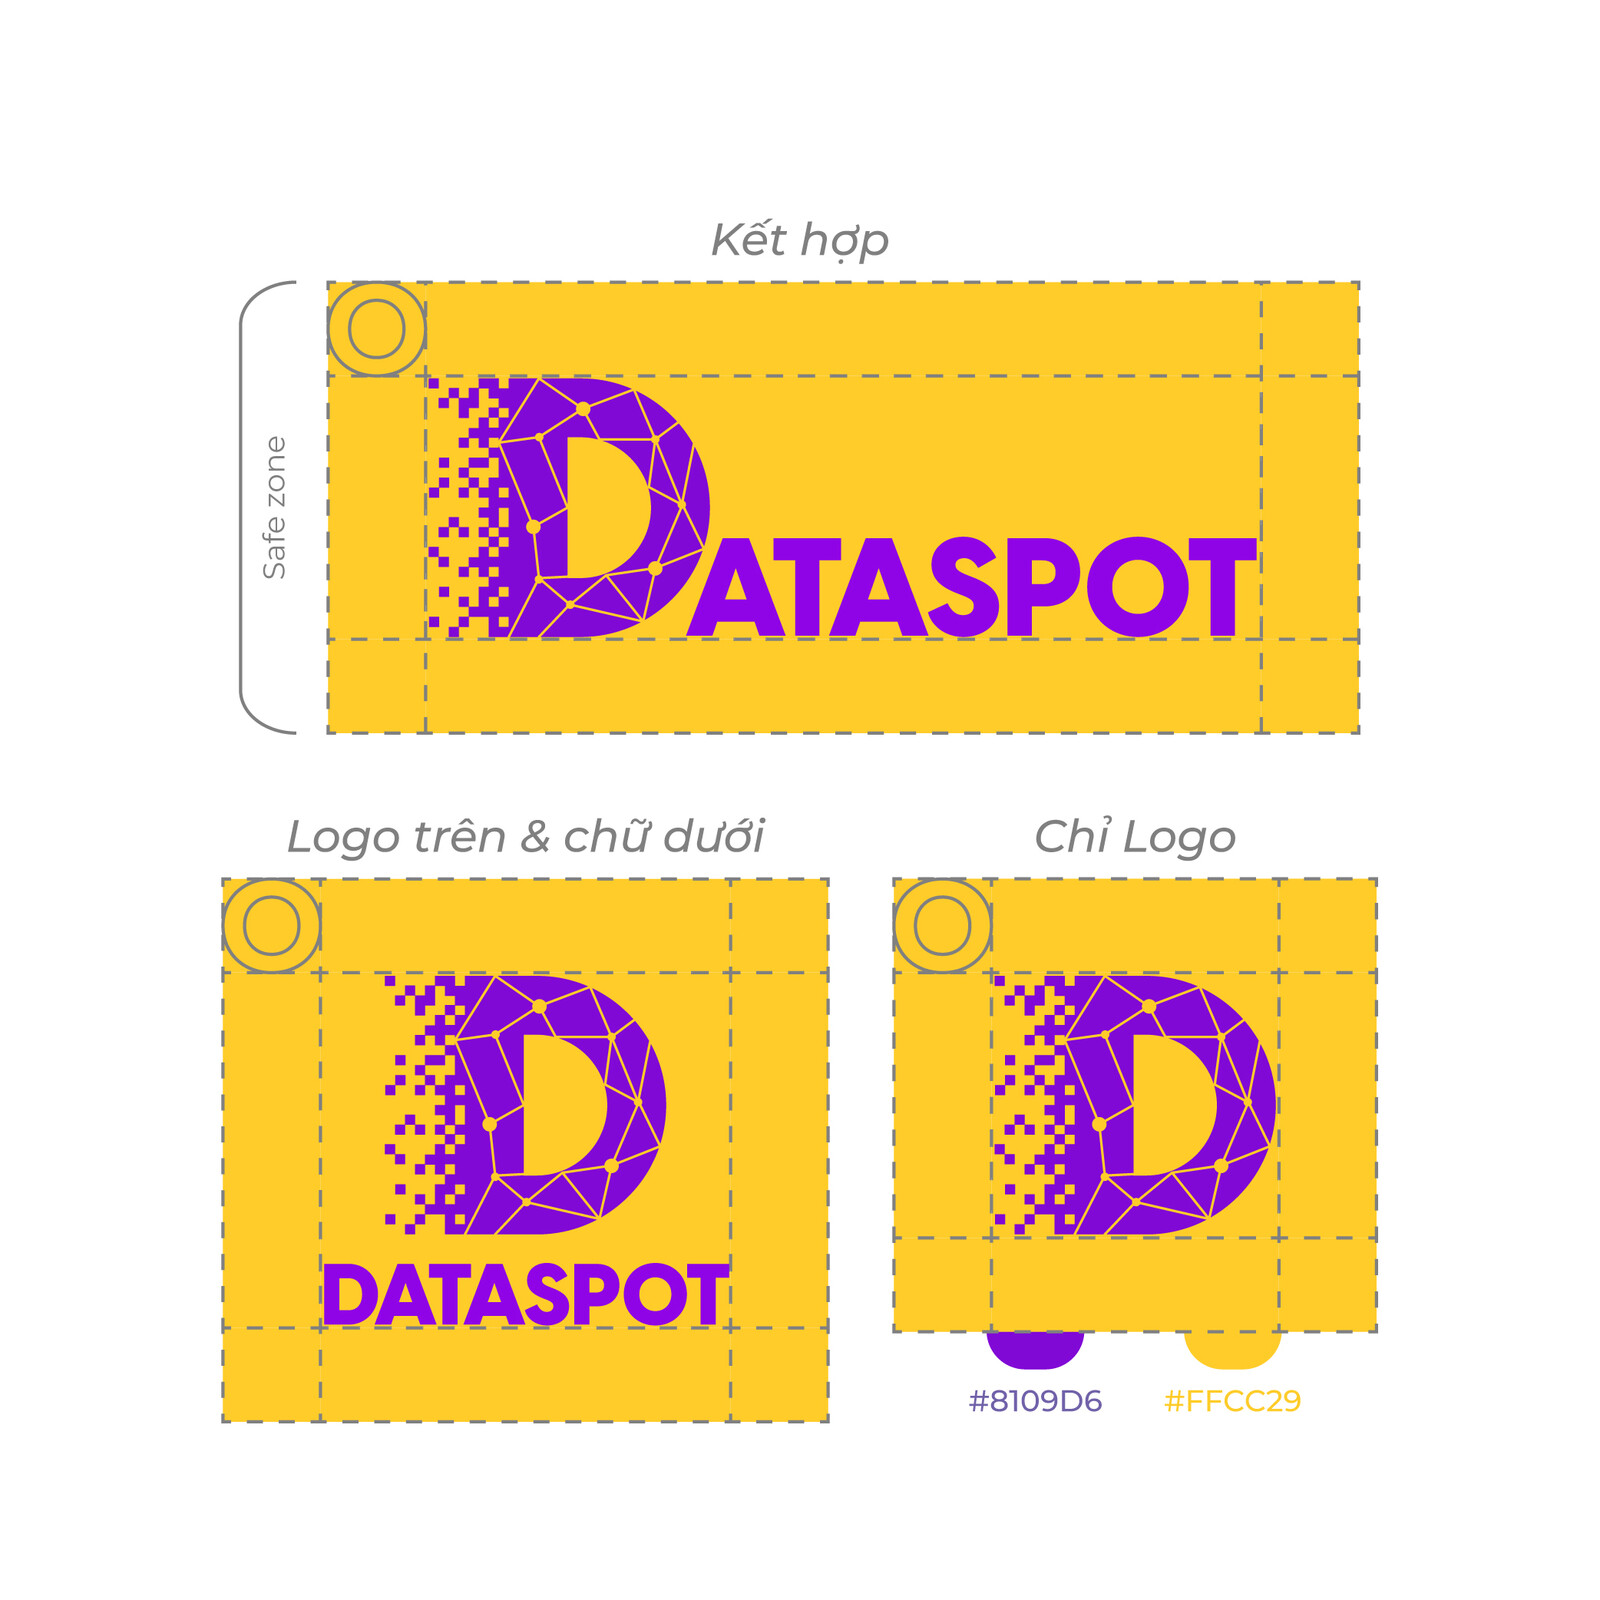 Three types of DATASPOT logo